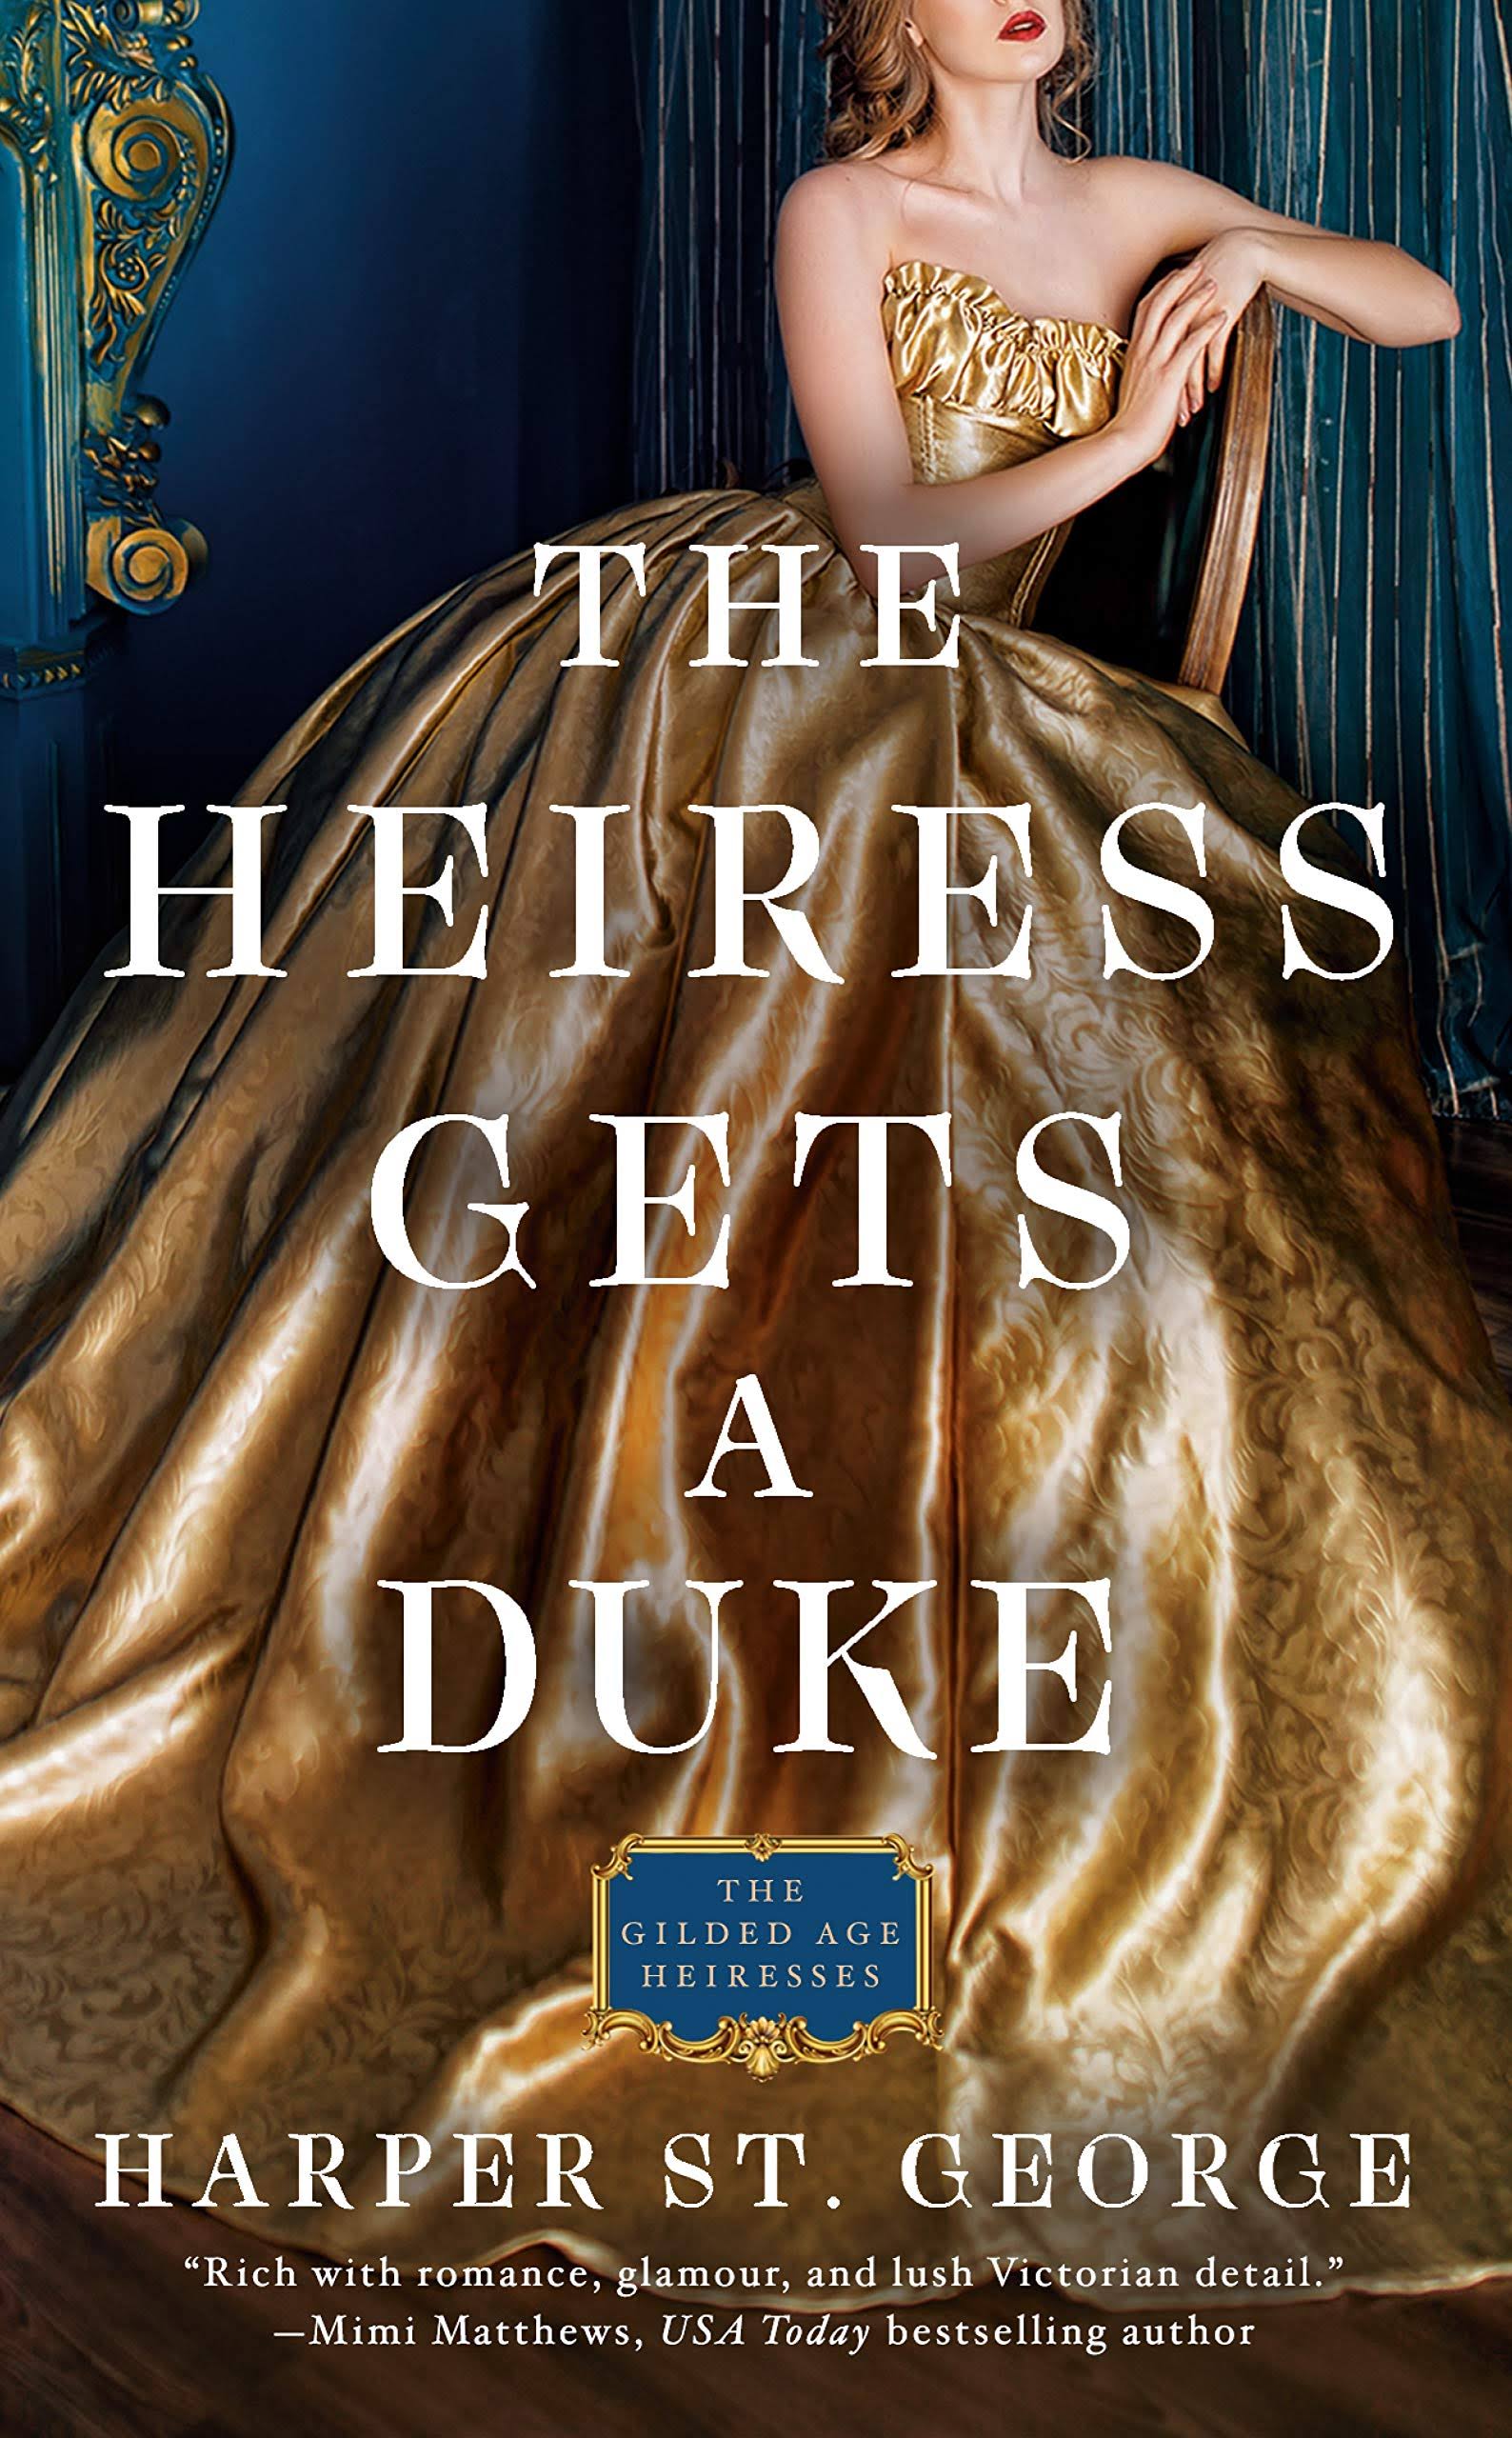 The Heiress Gets A Duke by Harper St. George